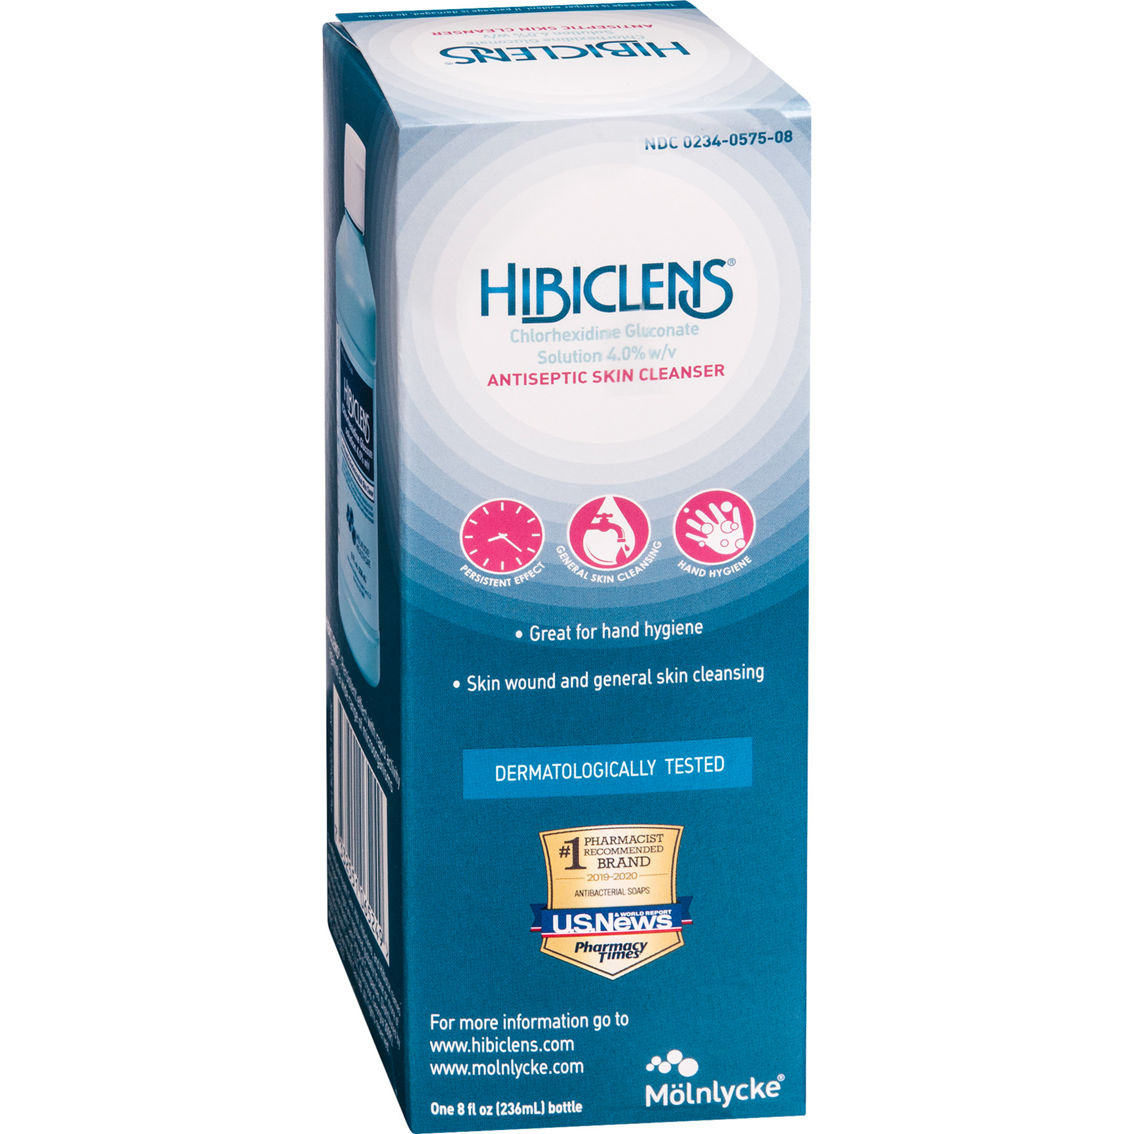 Hibiclens Antiseptic Skin Cleanser - Image 6 of 6